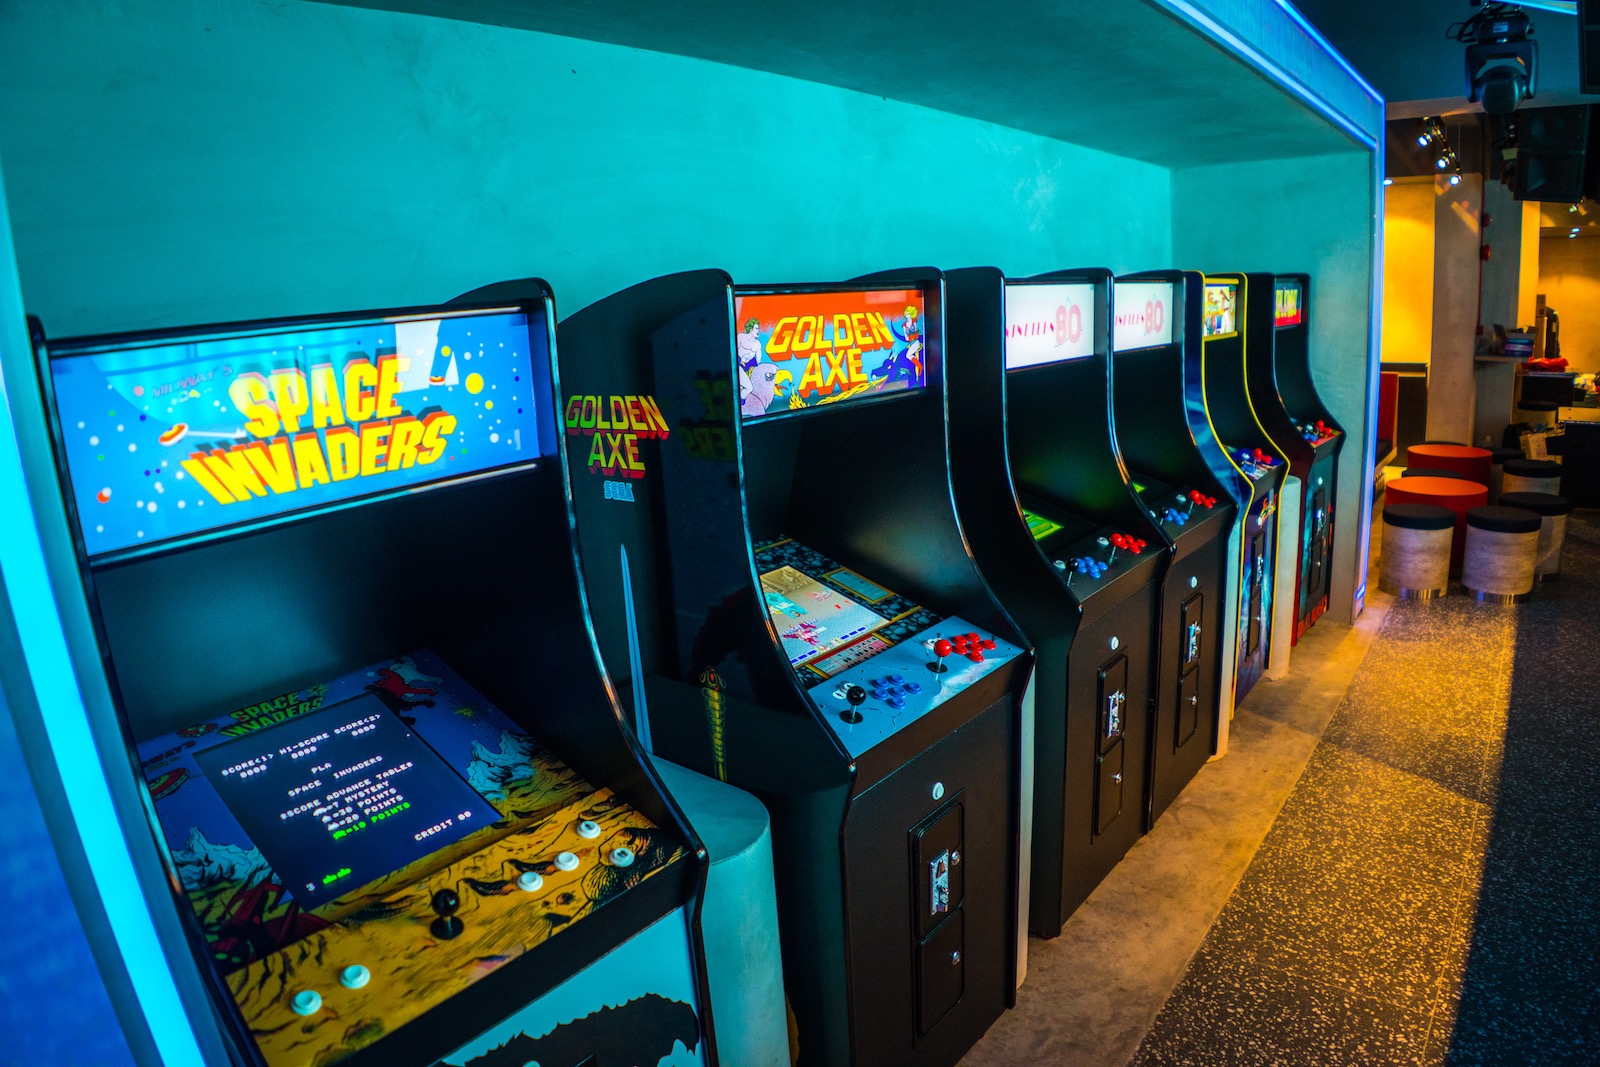 Retro Arcade 80s Arcade Games List 80s The Golden Age Of Arcade Games